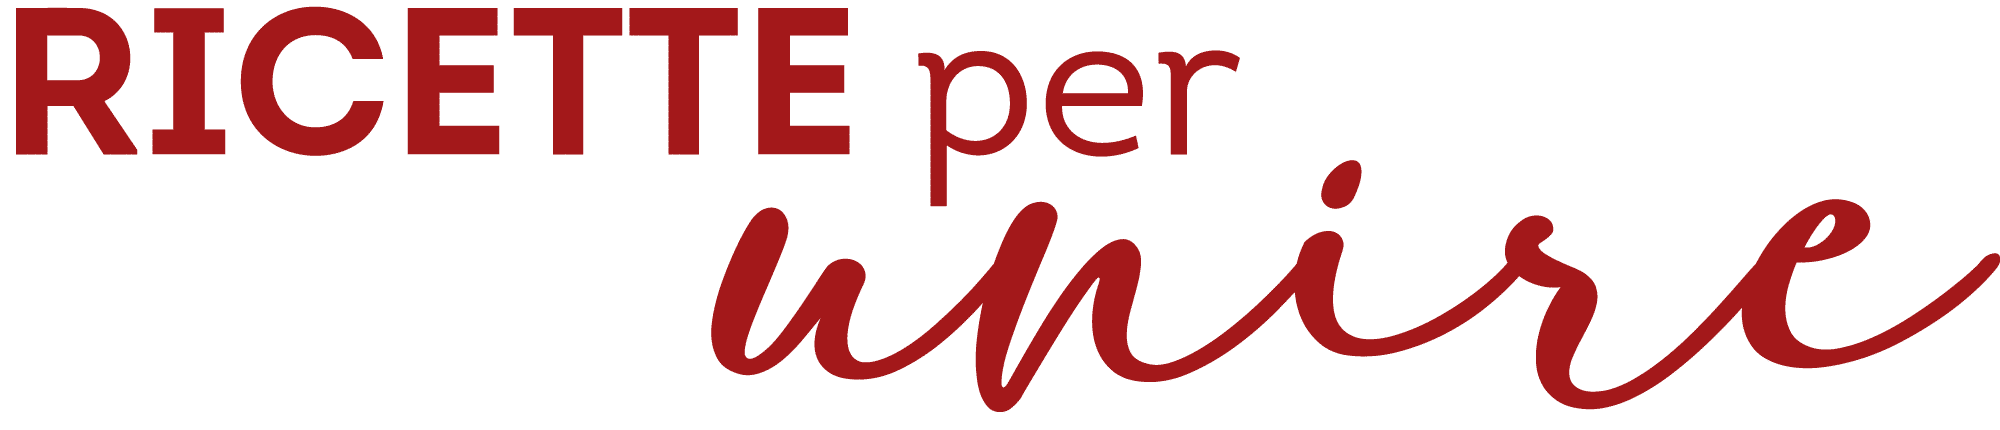 Logo Ricette per unire